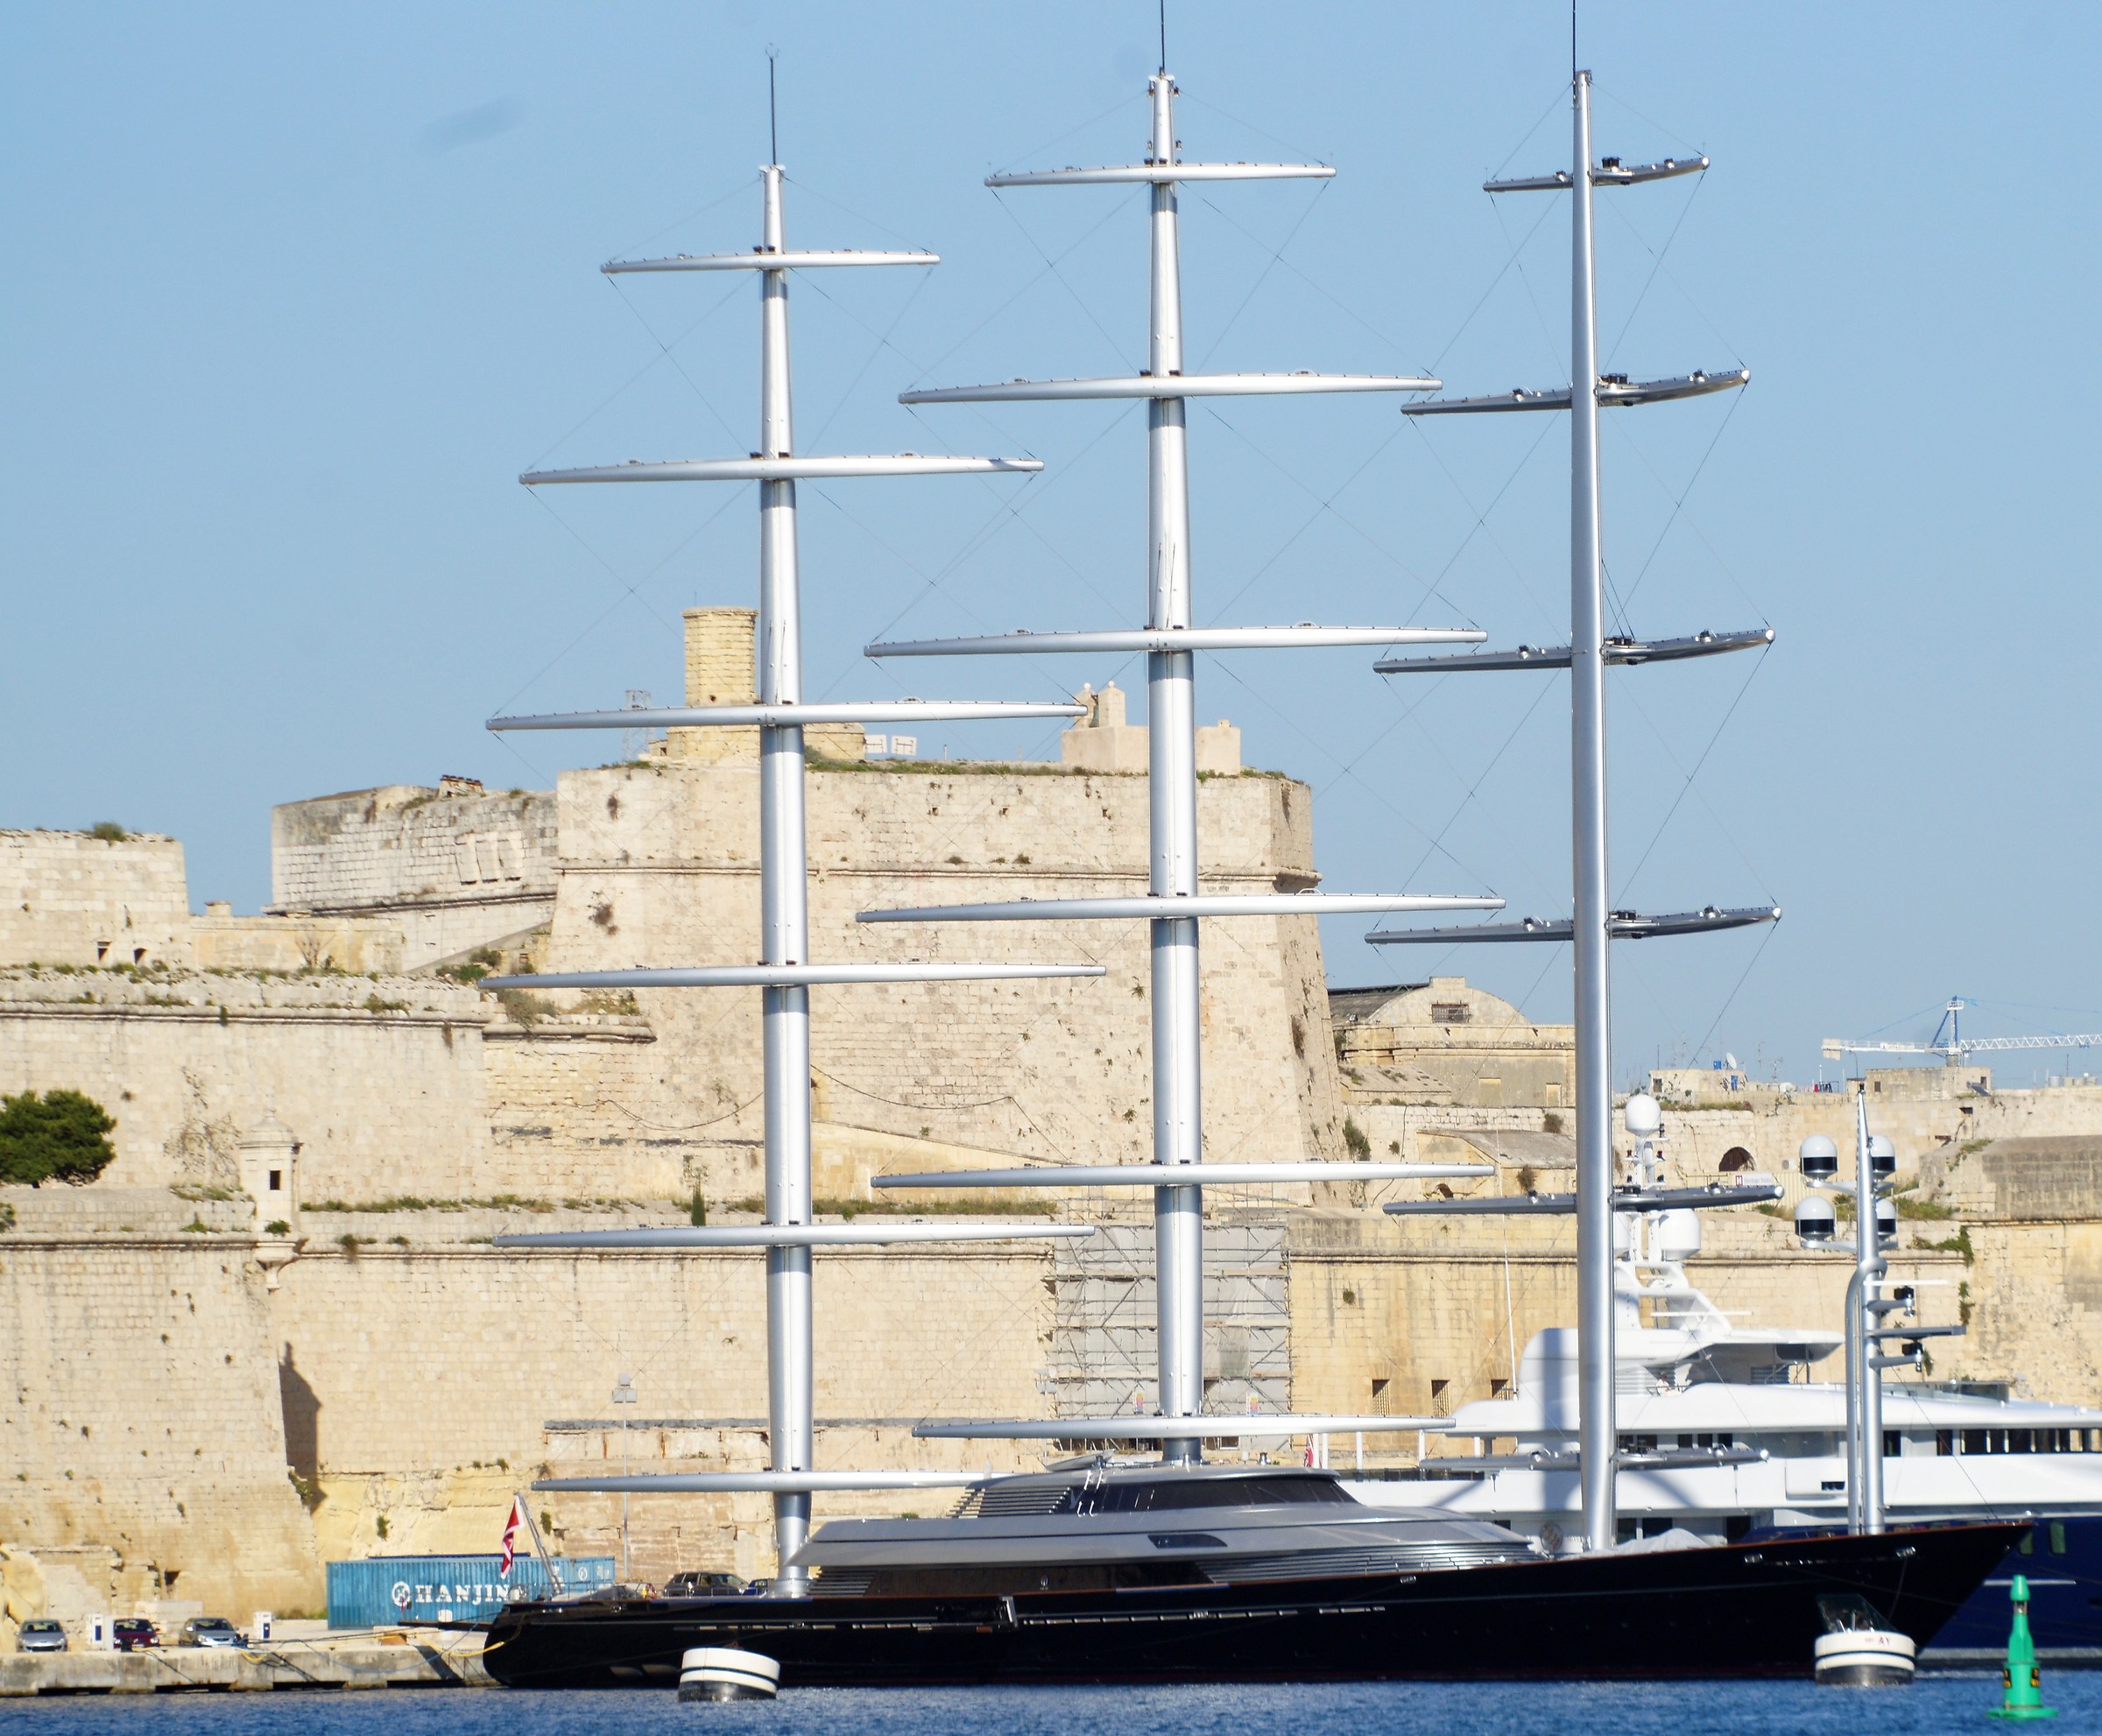 trialbero in the port of Malta...